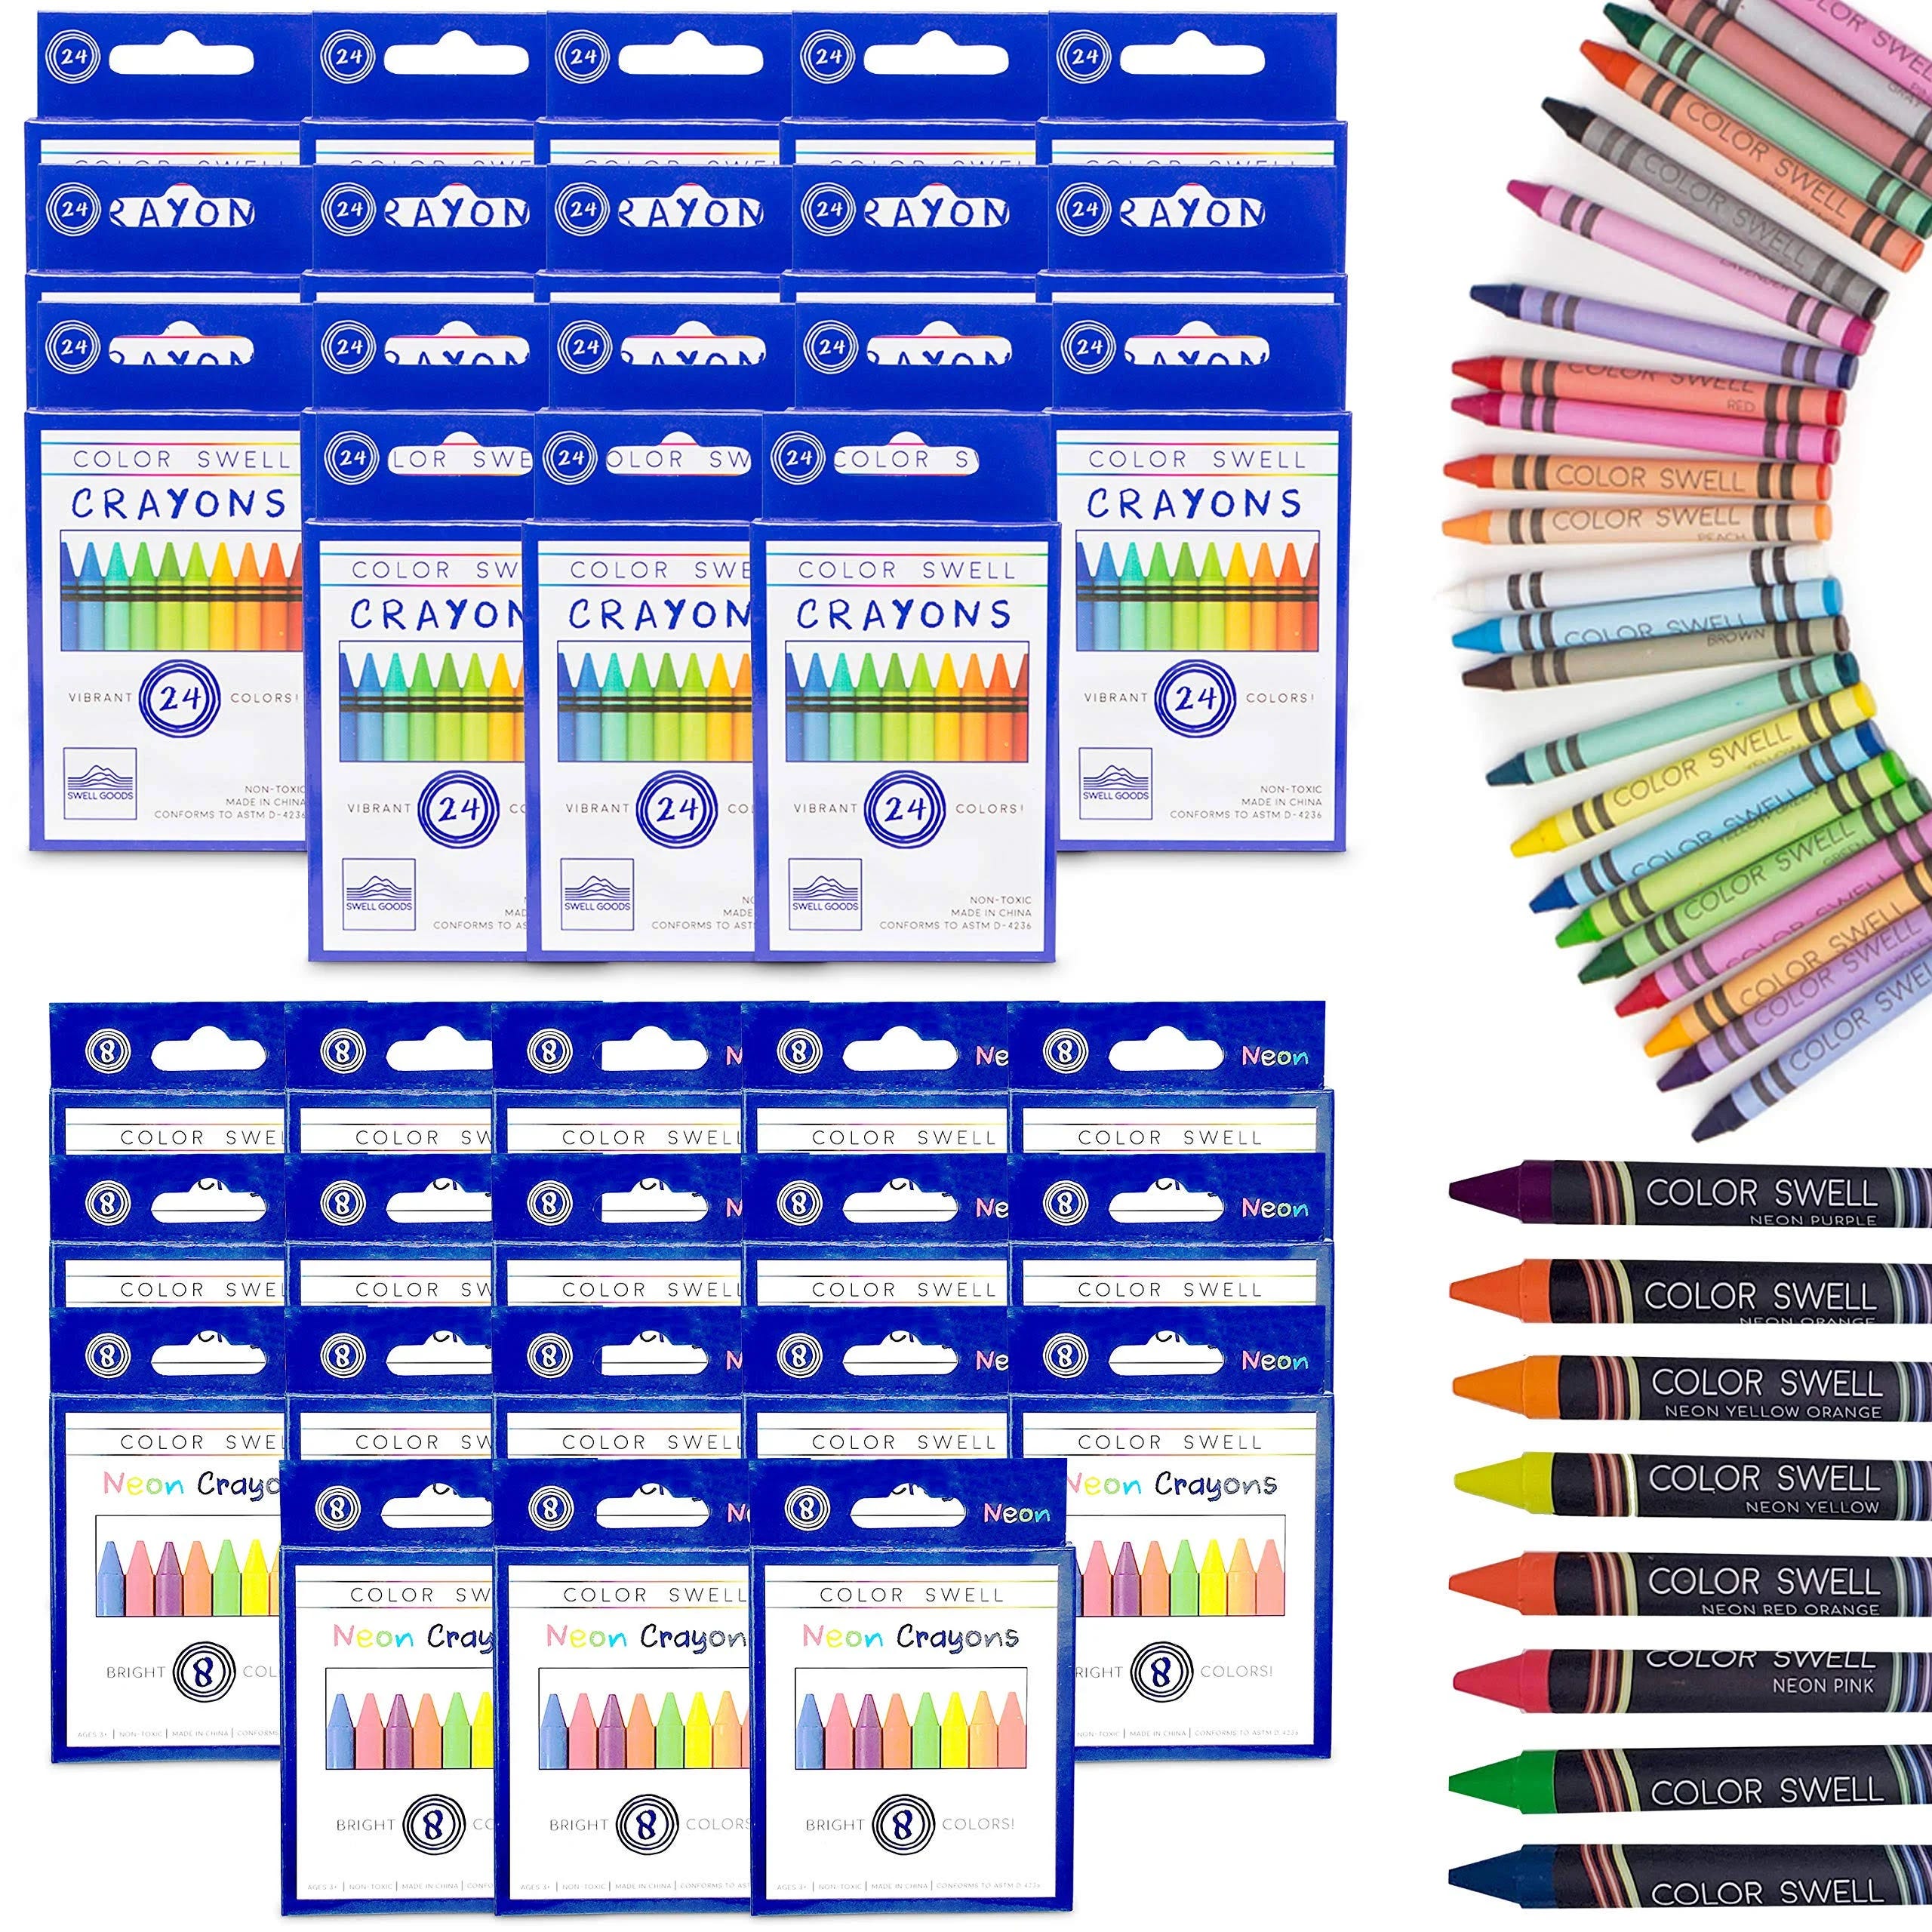 Vibrant Crayon Bulk Pack for Artistic Fun | Image